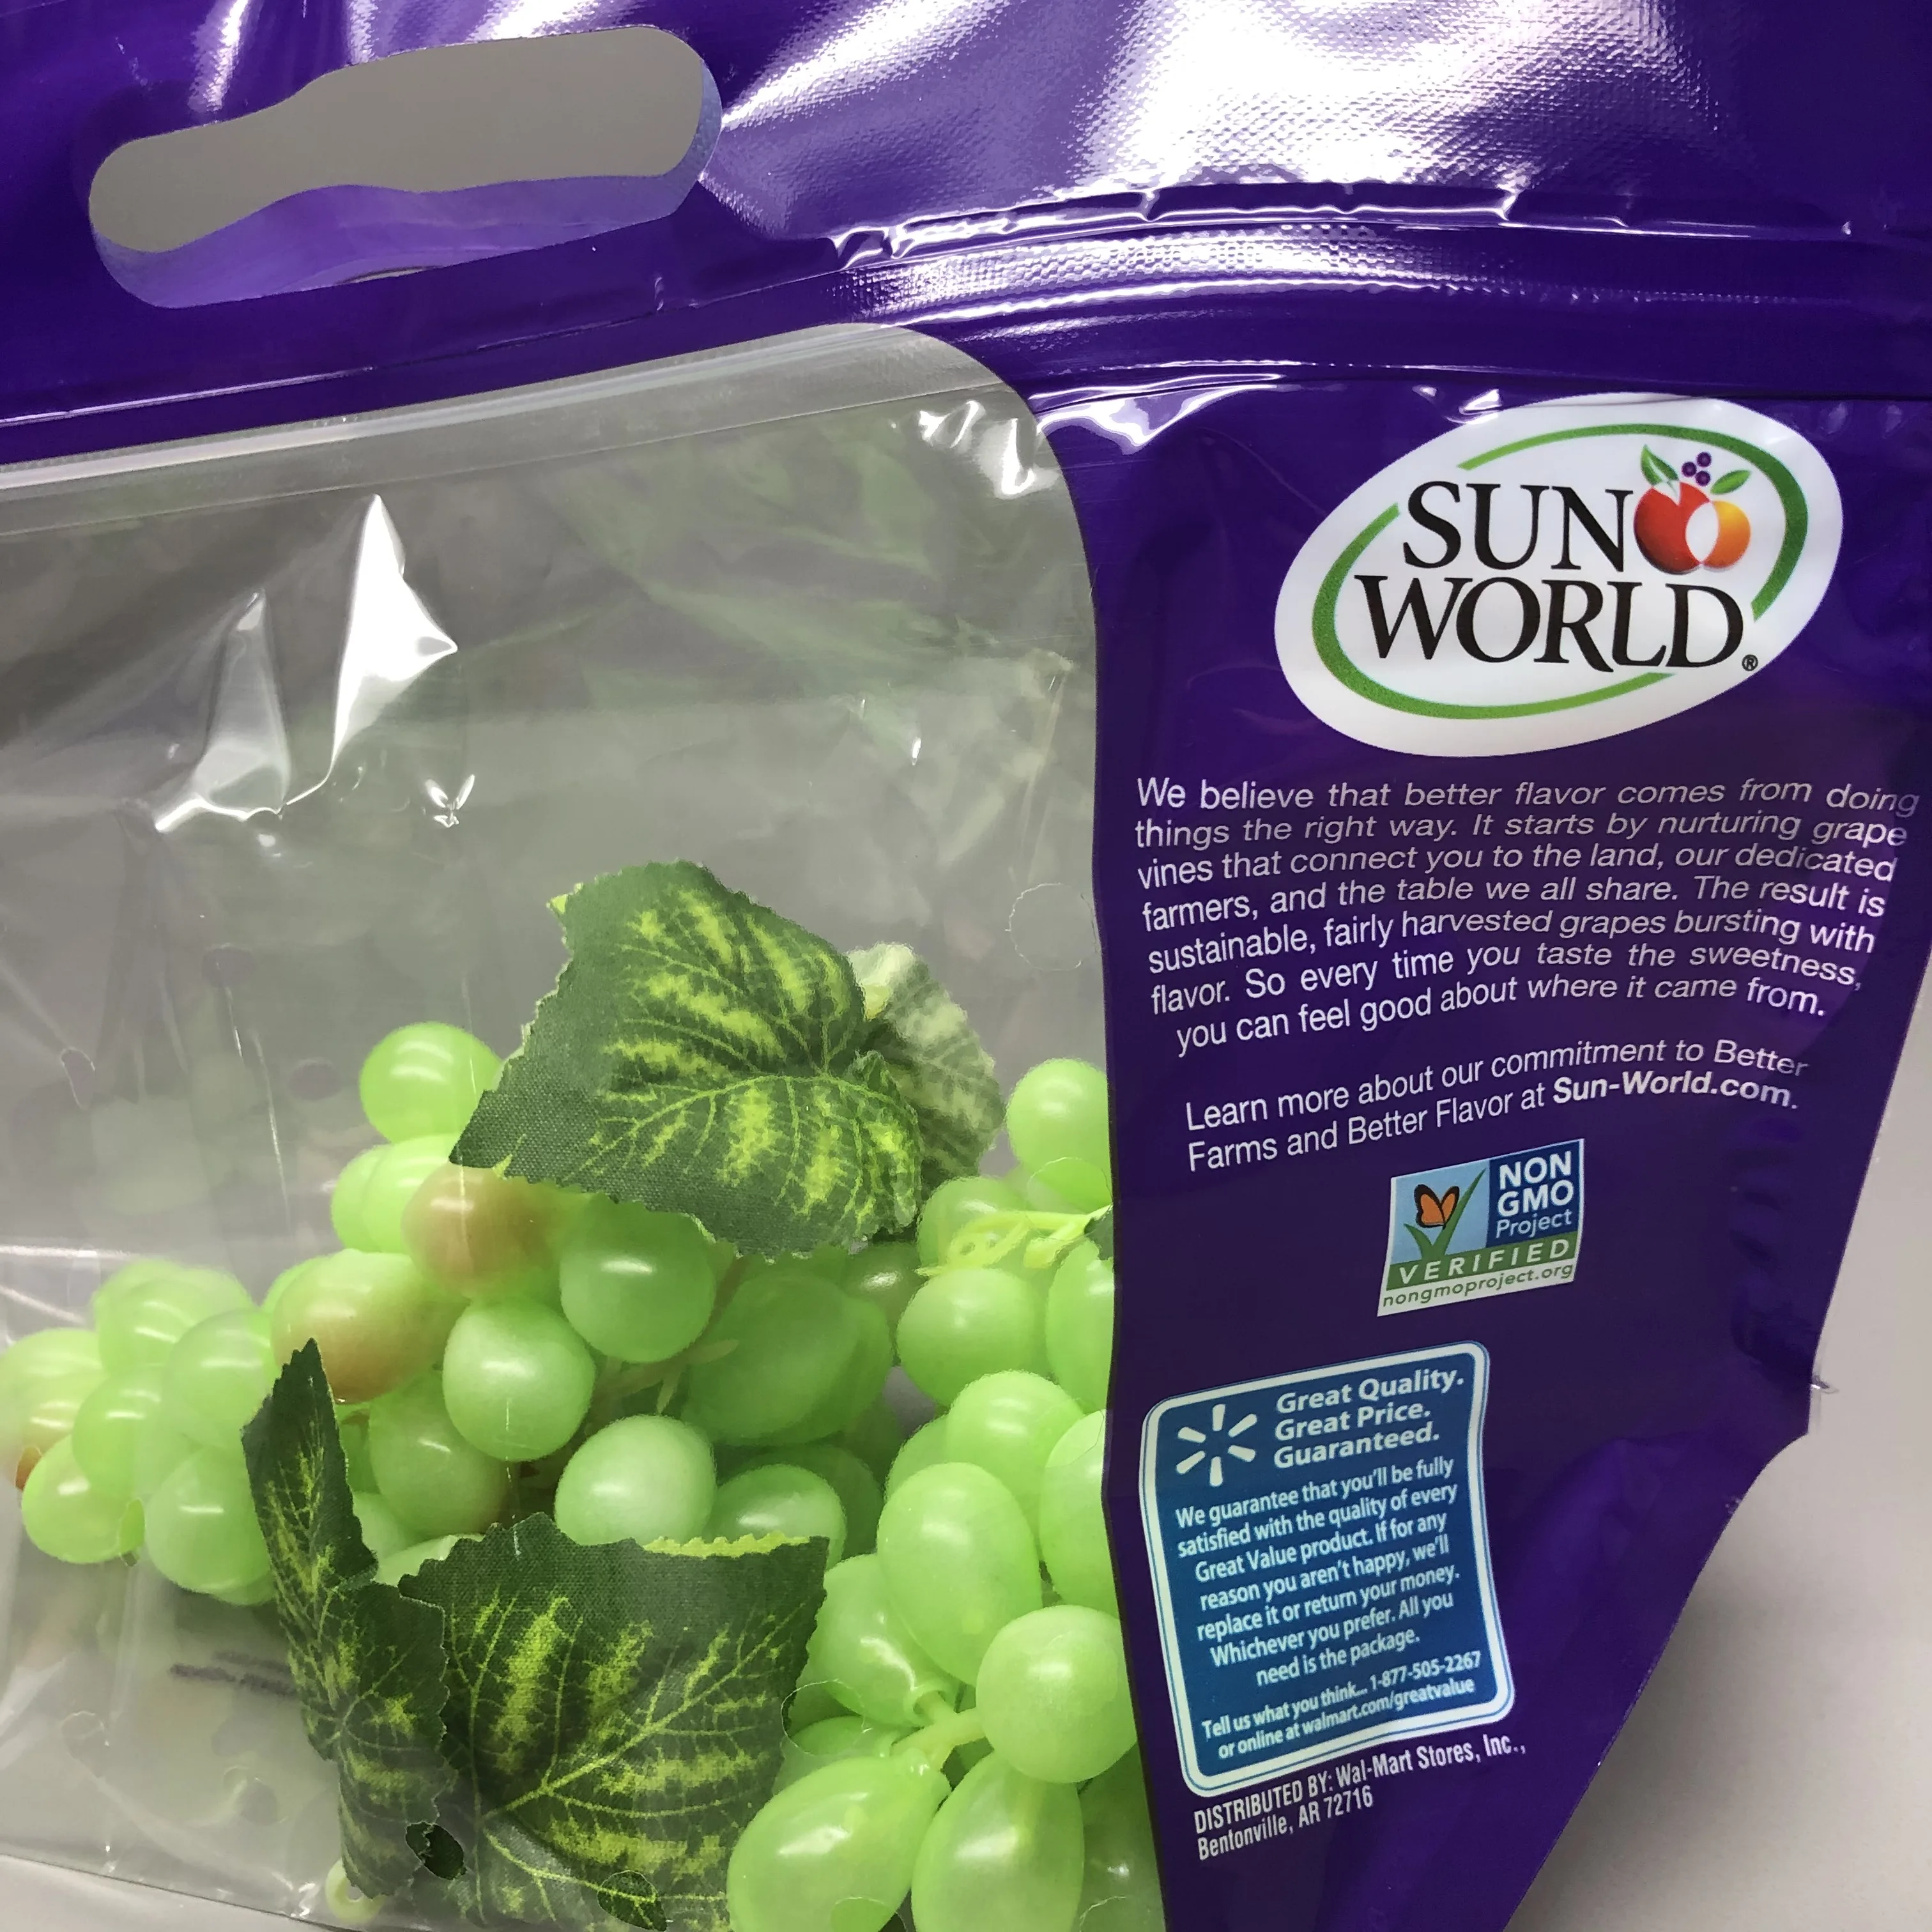 Anti-Fog OPP Plastic Fresh Vegetable/Fruit Packaging Zip Lock Bag with vent Holes and punch handle